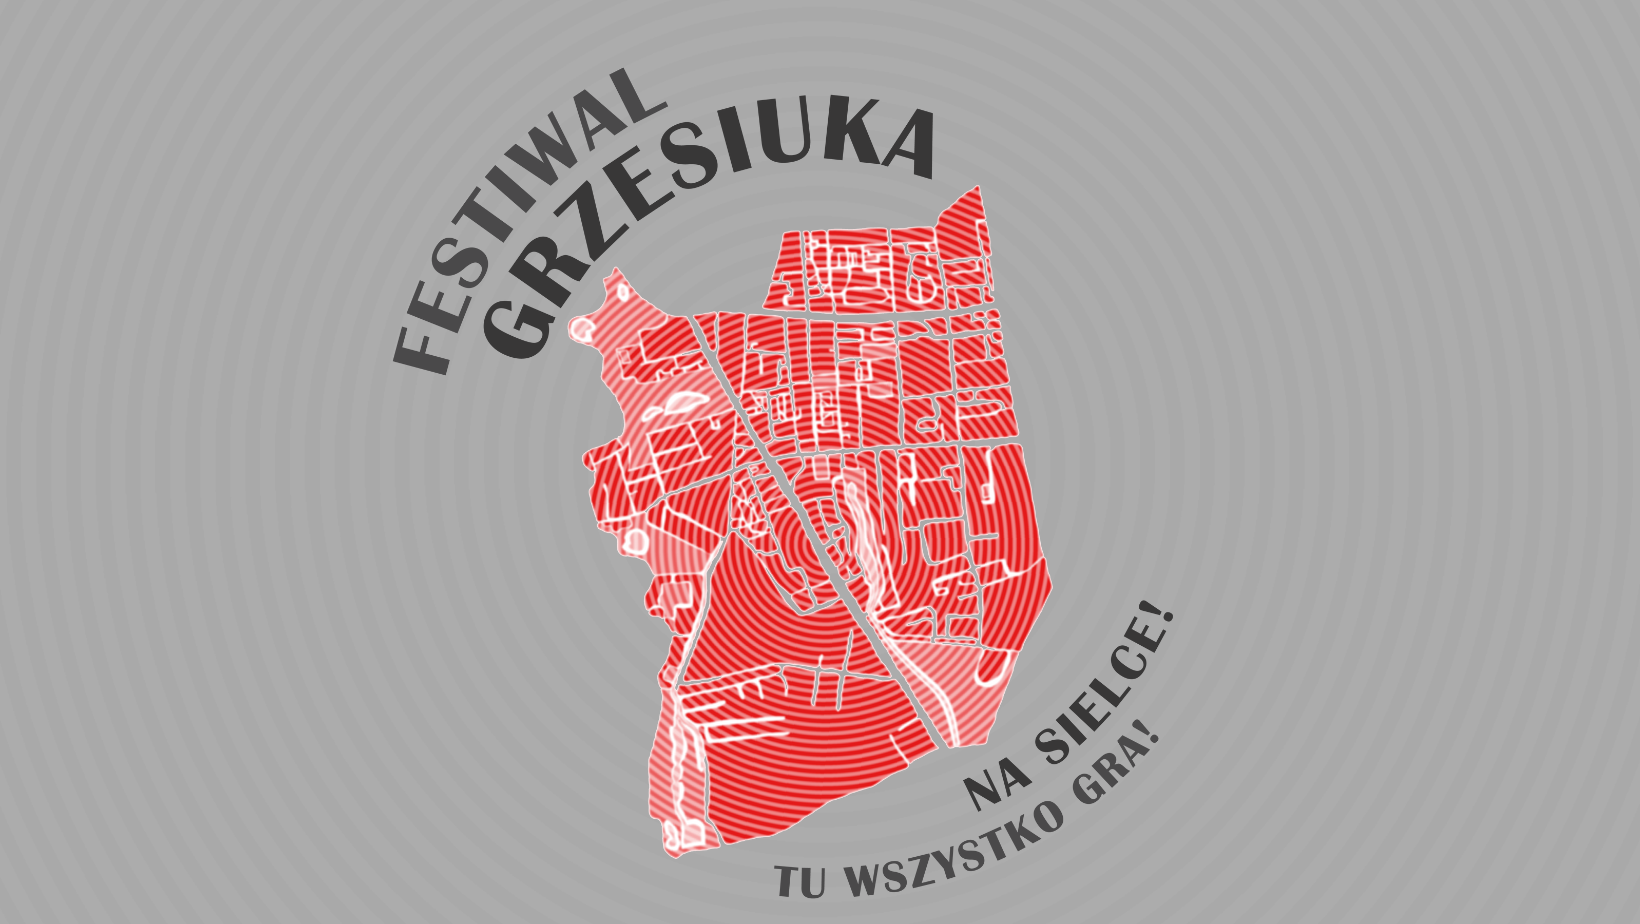 Festiwal Grzesiuka 2024
11 i 12 maja 